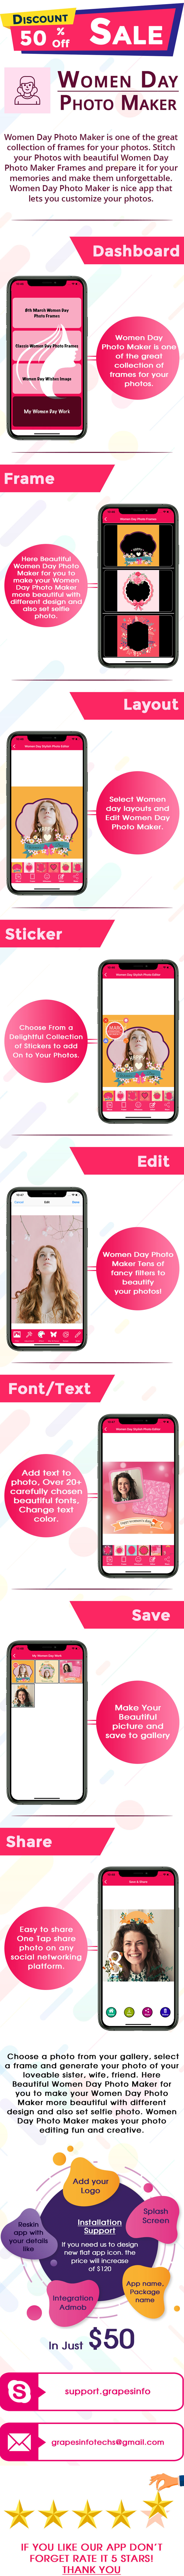 Women Day Photo Maker IOS (Objective C) - 1